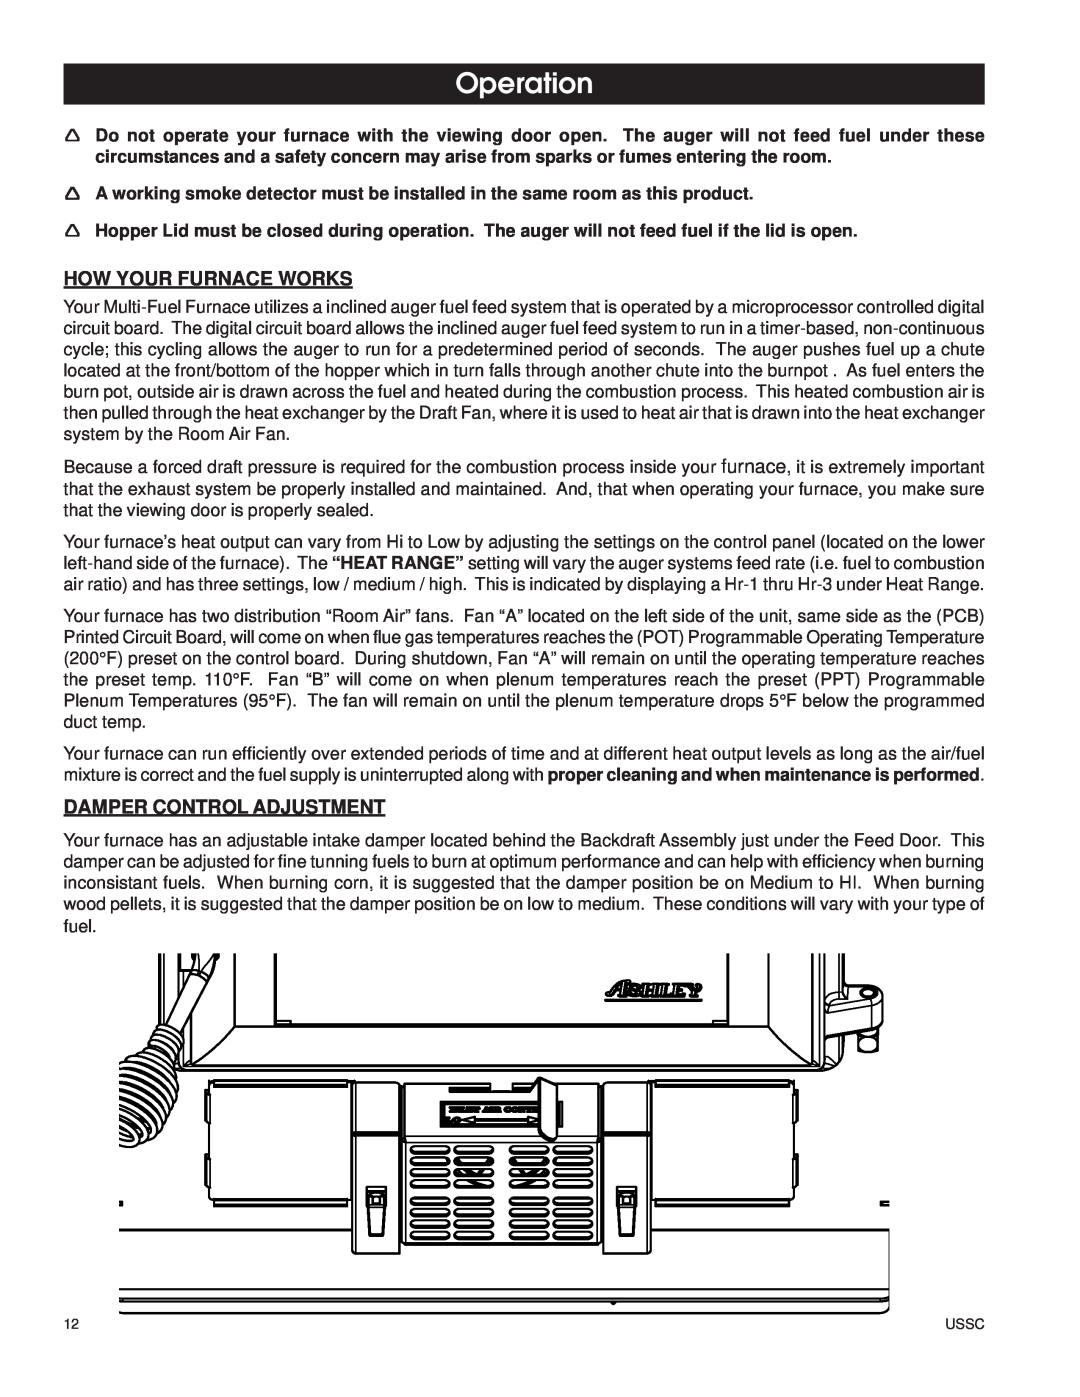 United States Stove 6110 owner manual Operation, How Your Furnace Works, Damper Control Adjustment 